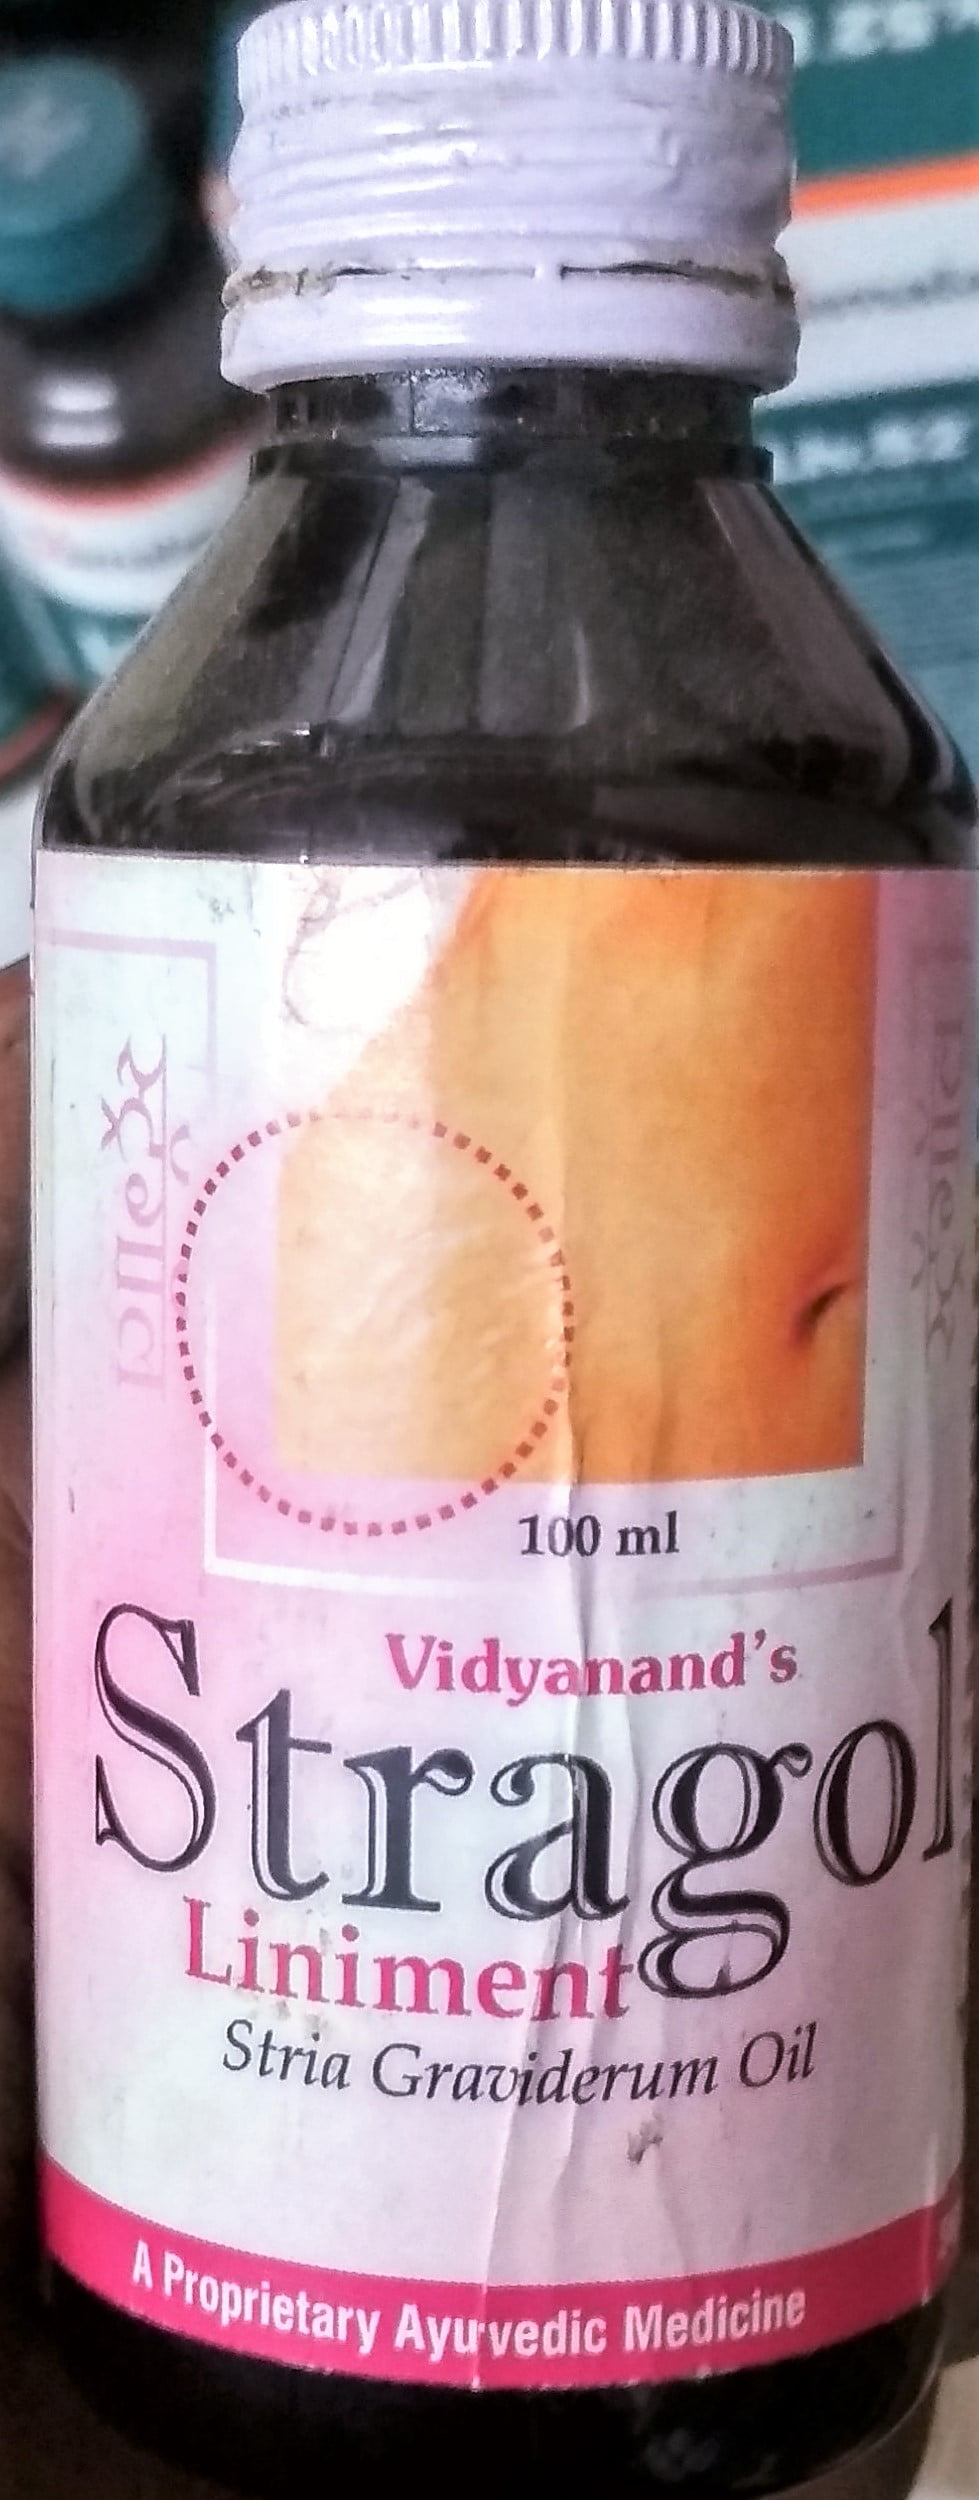 stragol liniment 100 ml Vidyanand Labs Pvt Ltd